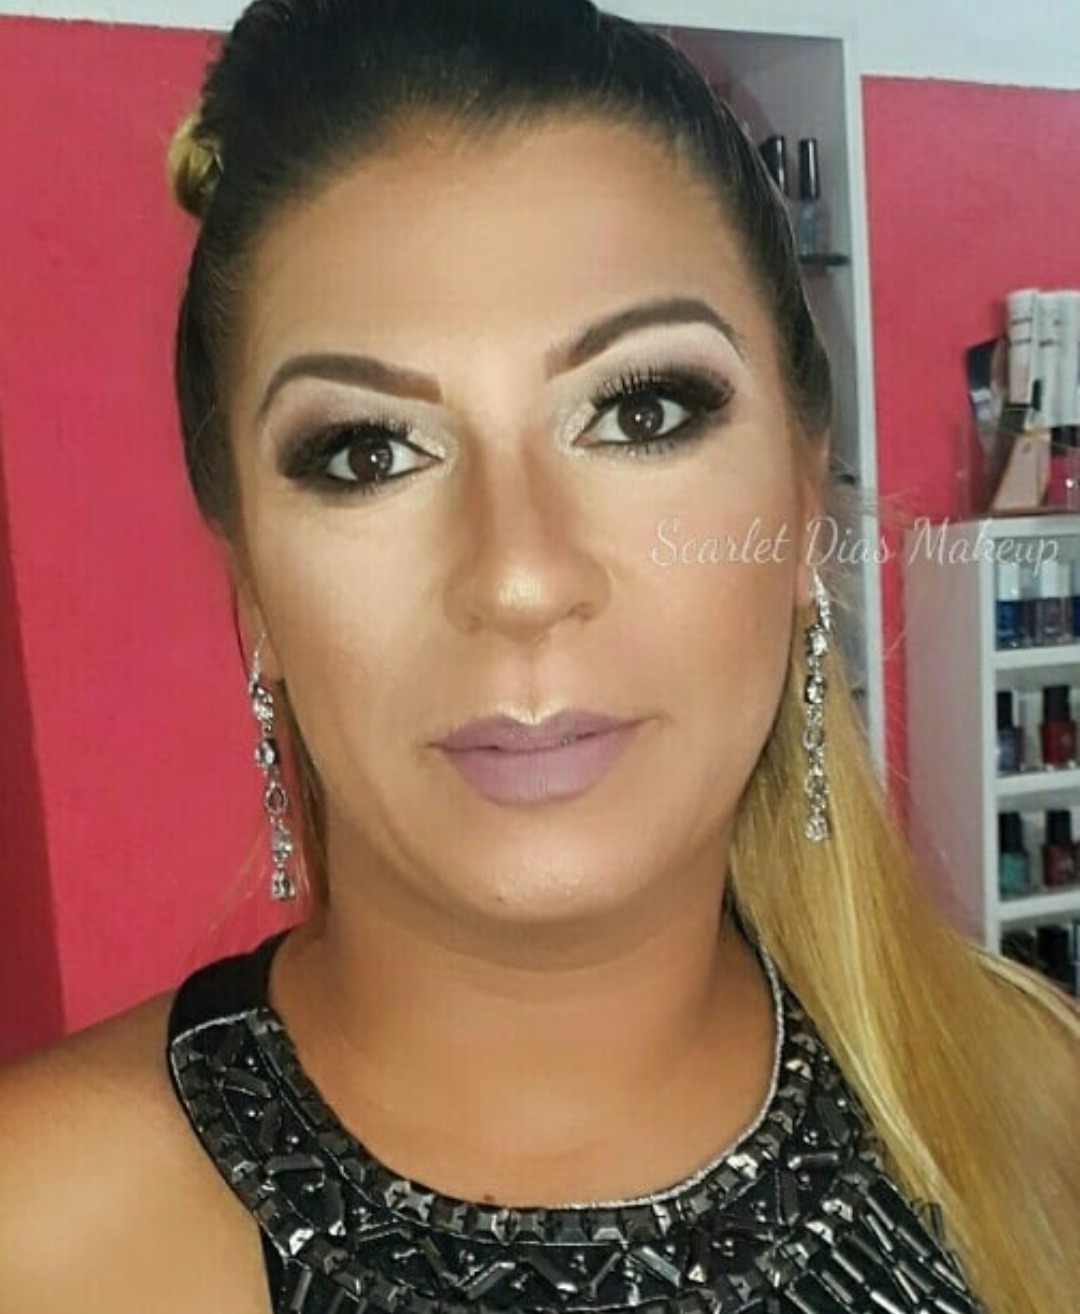 #makeup #makeupeditorial #lovemakeup #makemagazine #beauty #woman #beautygirl #maquiagem #maquiagemeditorial #amomaquiagem #maquiagemderevista #beleza #mulher #belezafeminina #makenoiva #makemadrinha #makeformanda #noivas #madrinhas #formanda #makebrasil #makesp maquiagem maquiador(a)